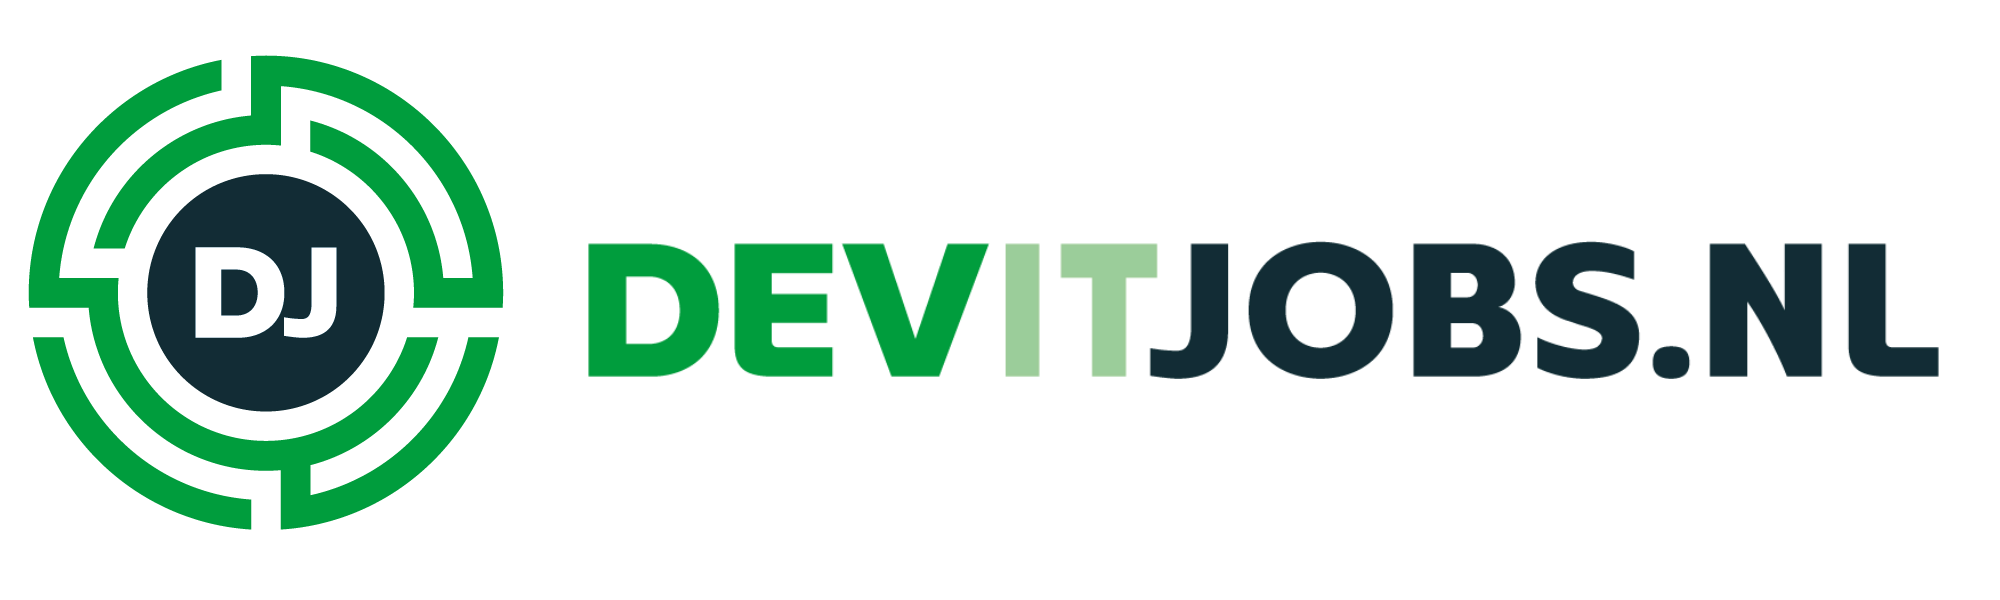 DEVitjobs logo